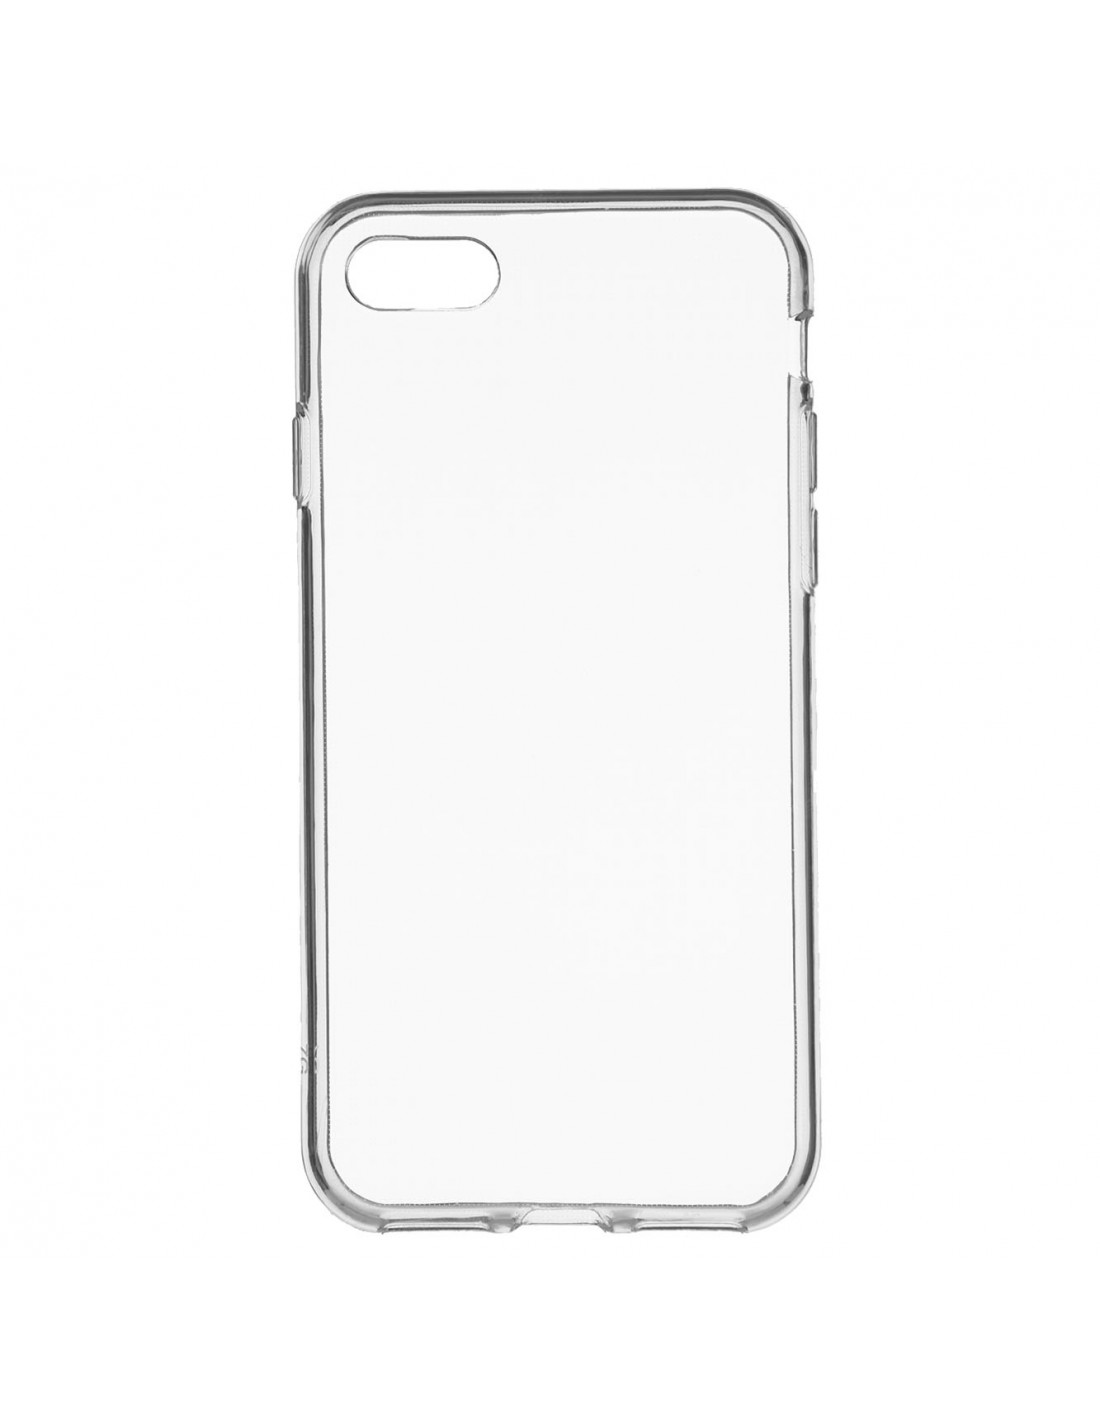 Carcasa iPhone 8 blanca – FLUXX REFACCIONES PARA CELULAR